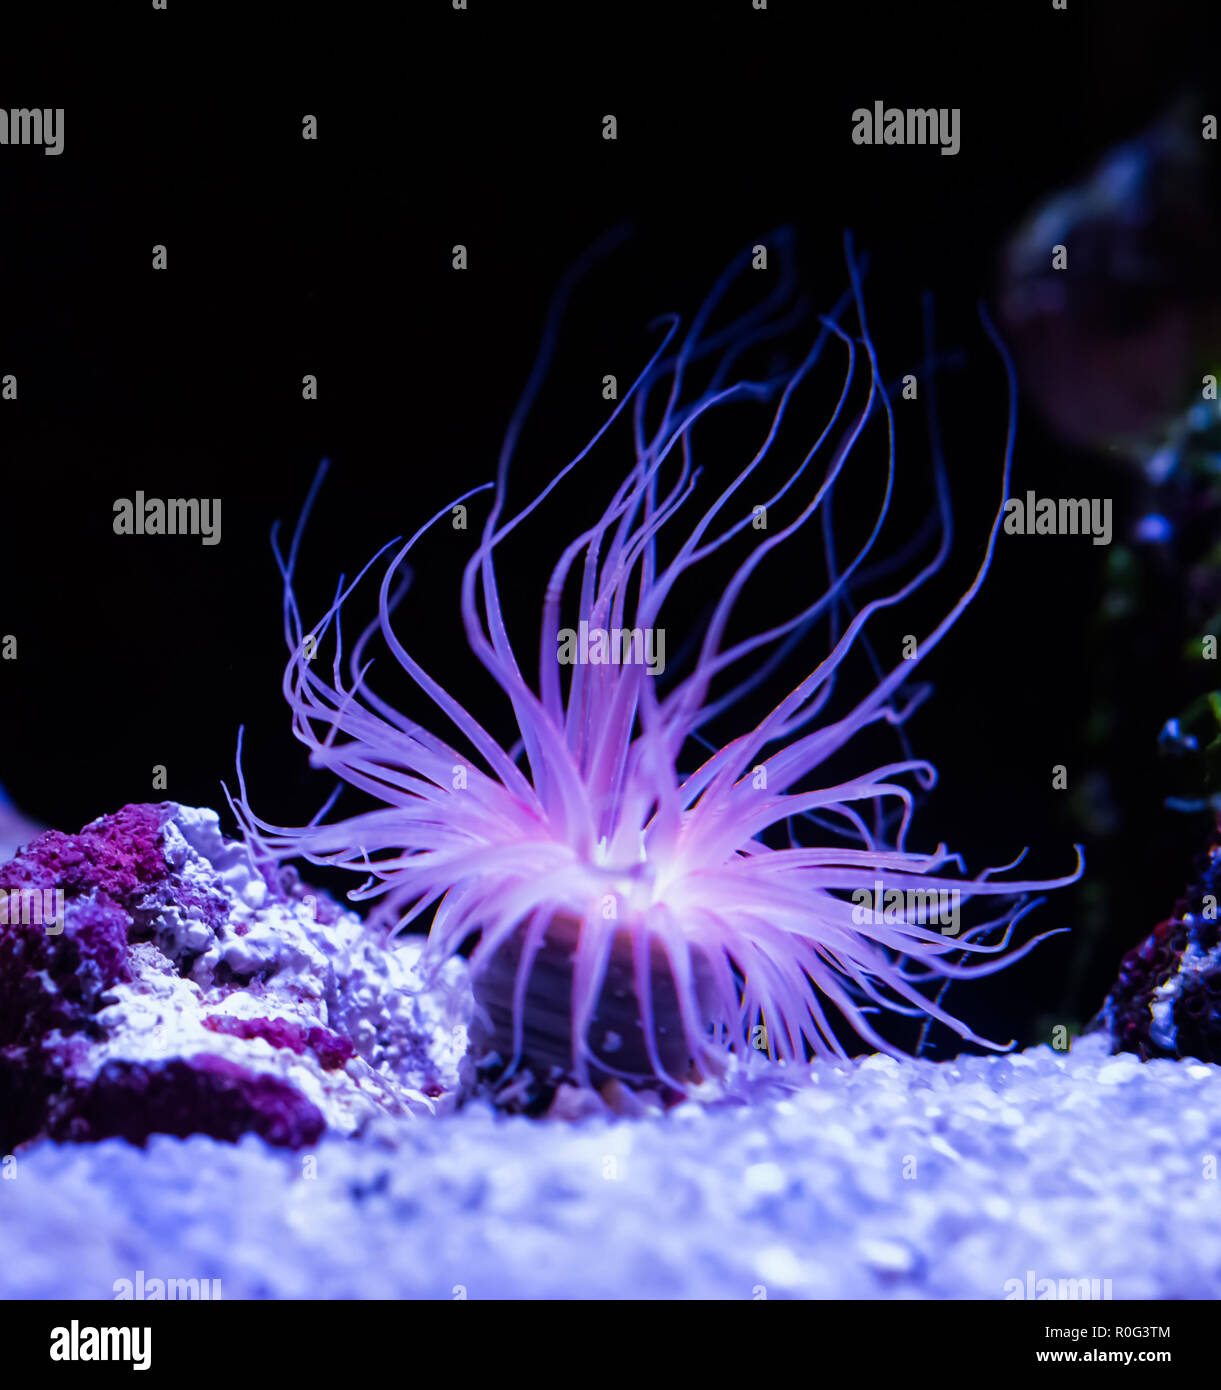 beautiful sea anemone lighting up in purple blue and pink vibrant colors aquatic underwater ocean animal plant Stock Photo